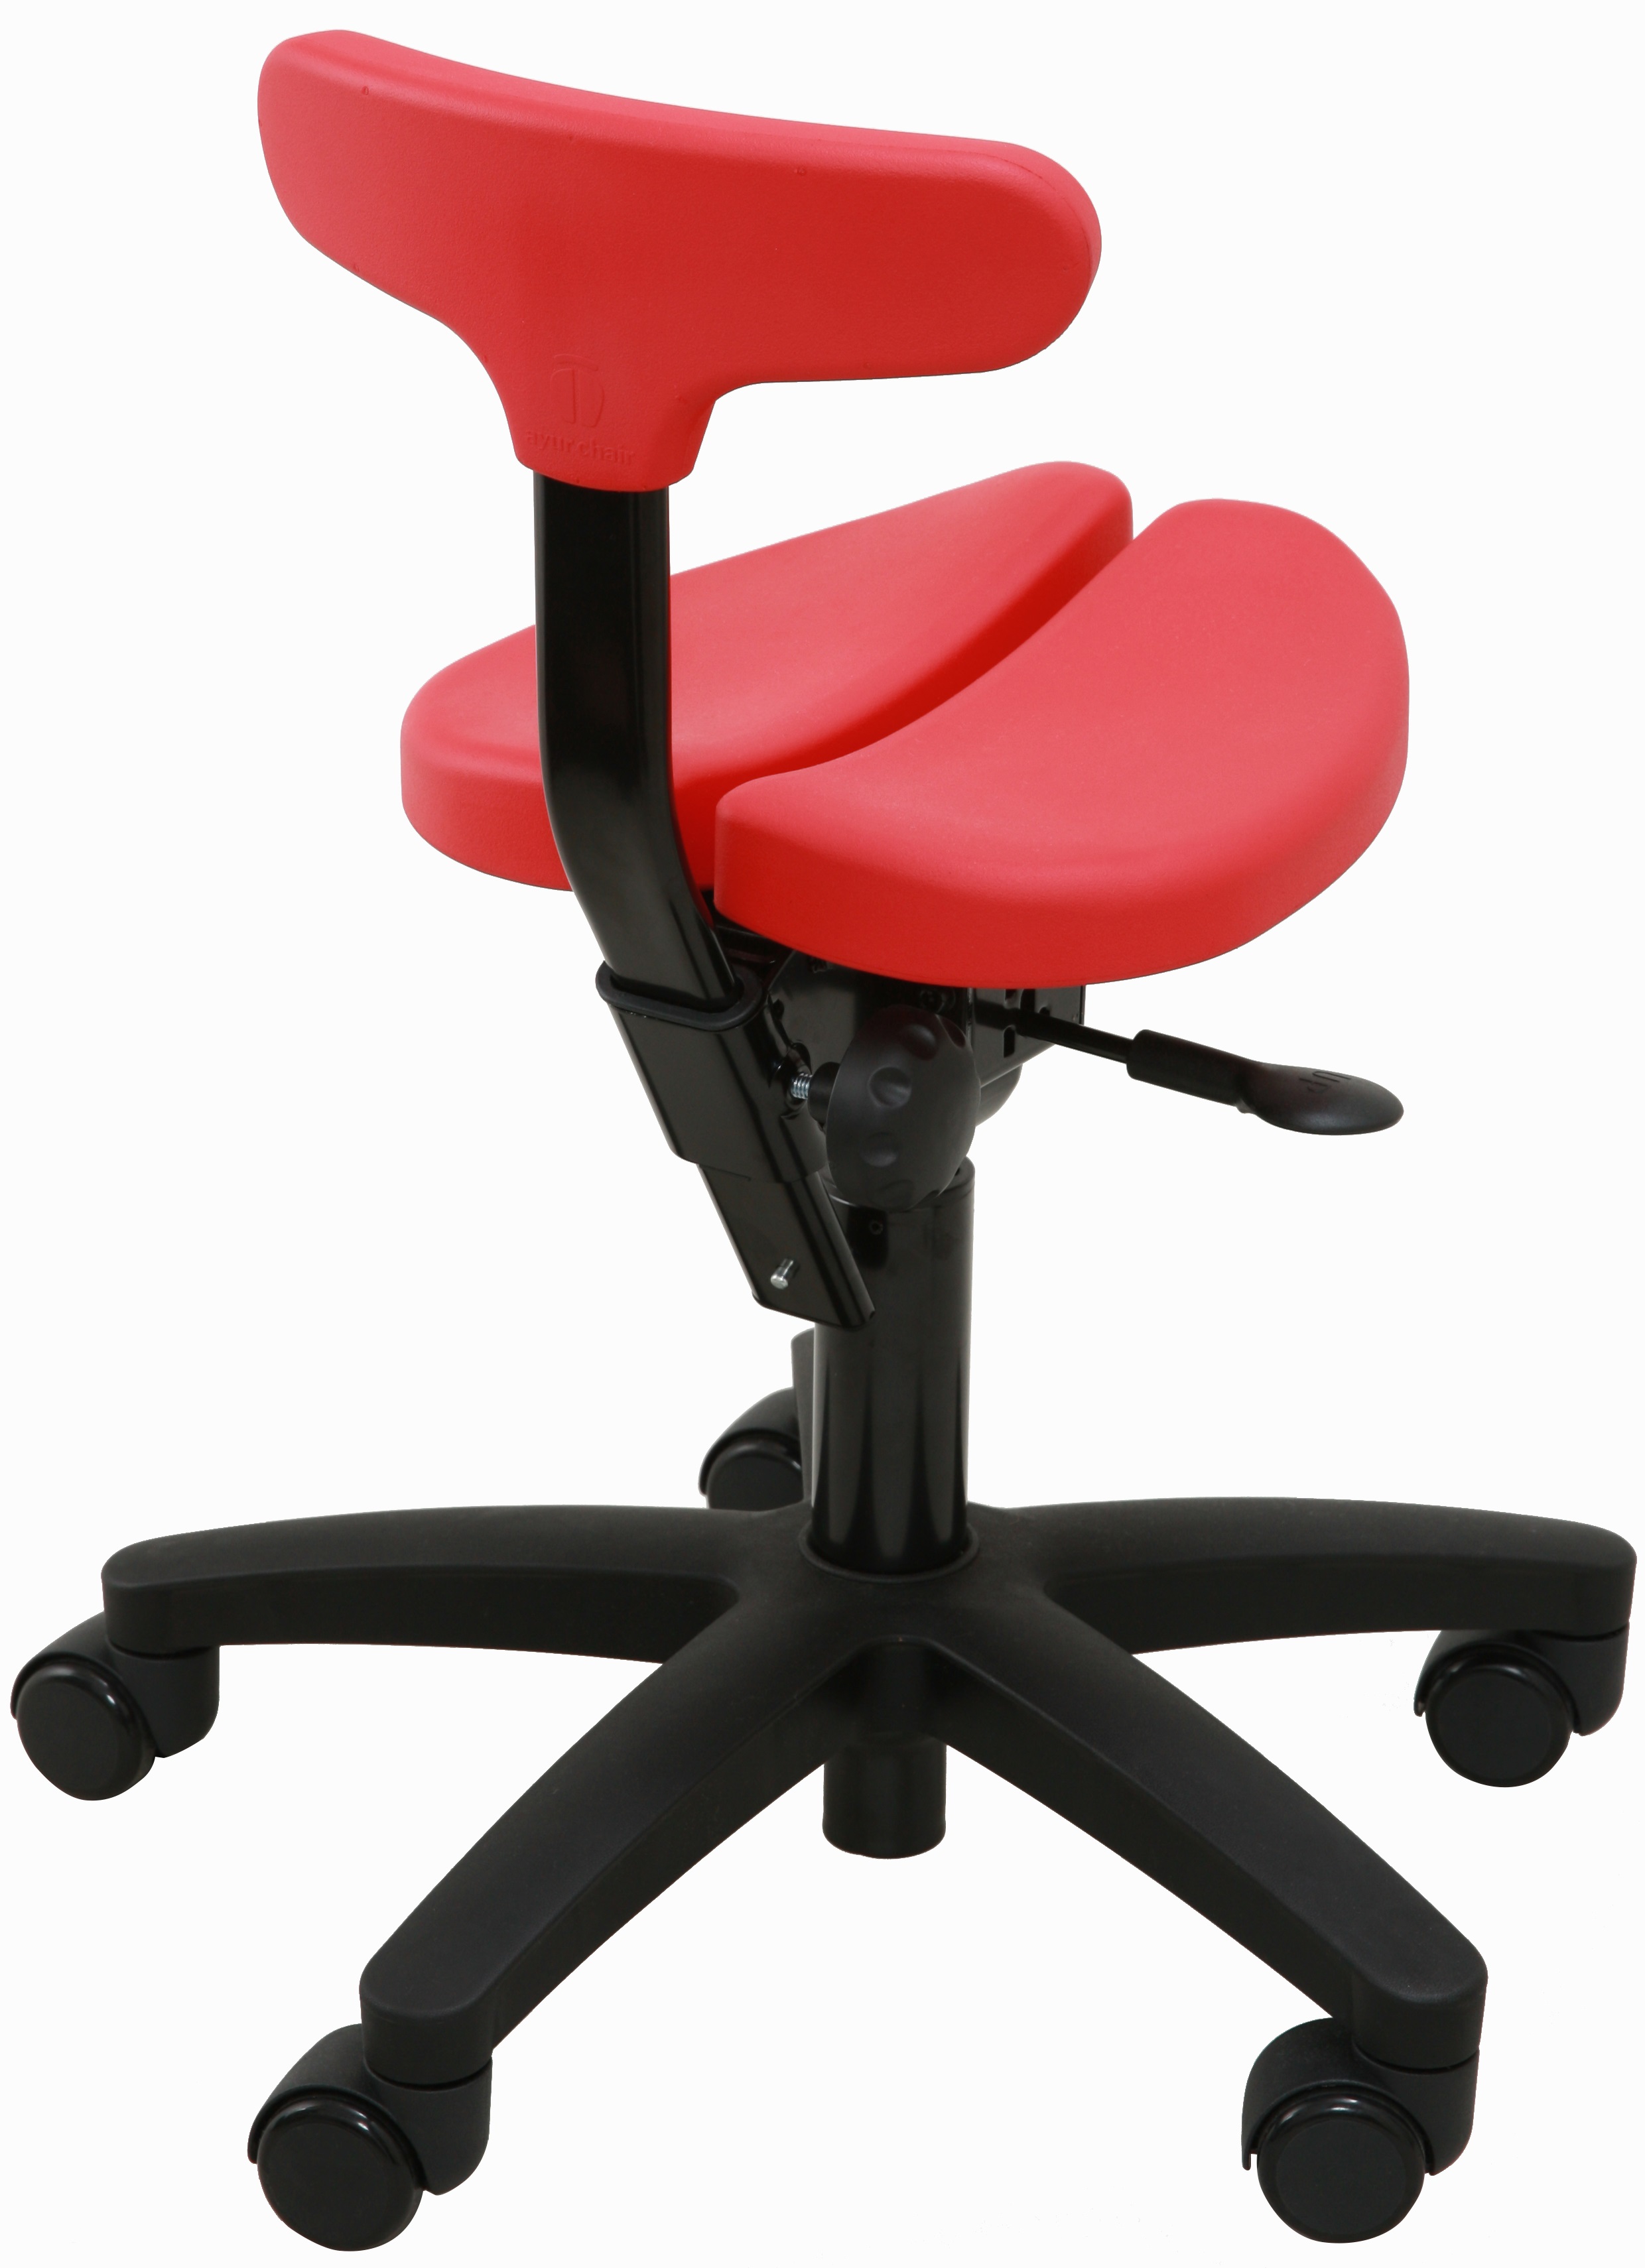 ayur-chair octopus RED | ayur-chair Japan Co.,Ltd